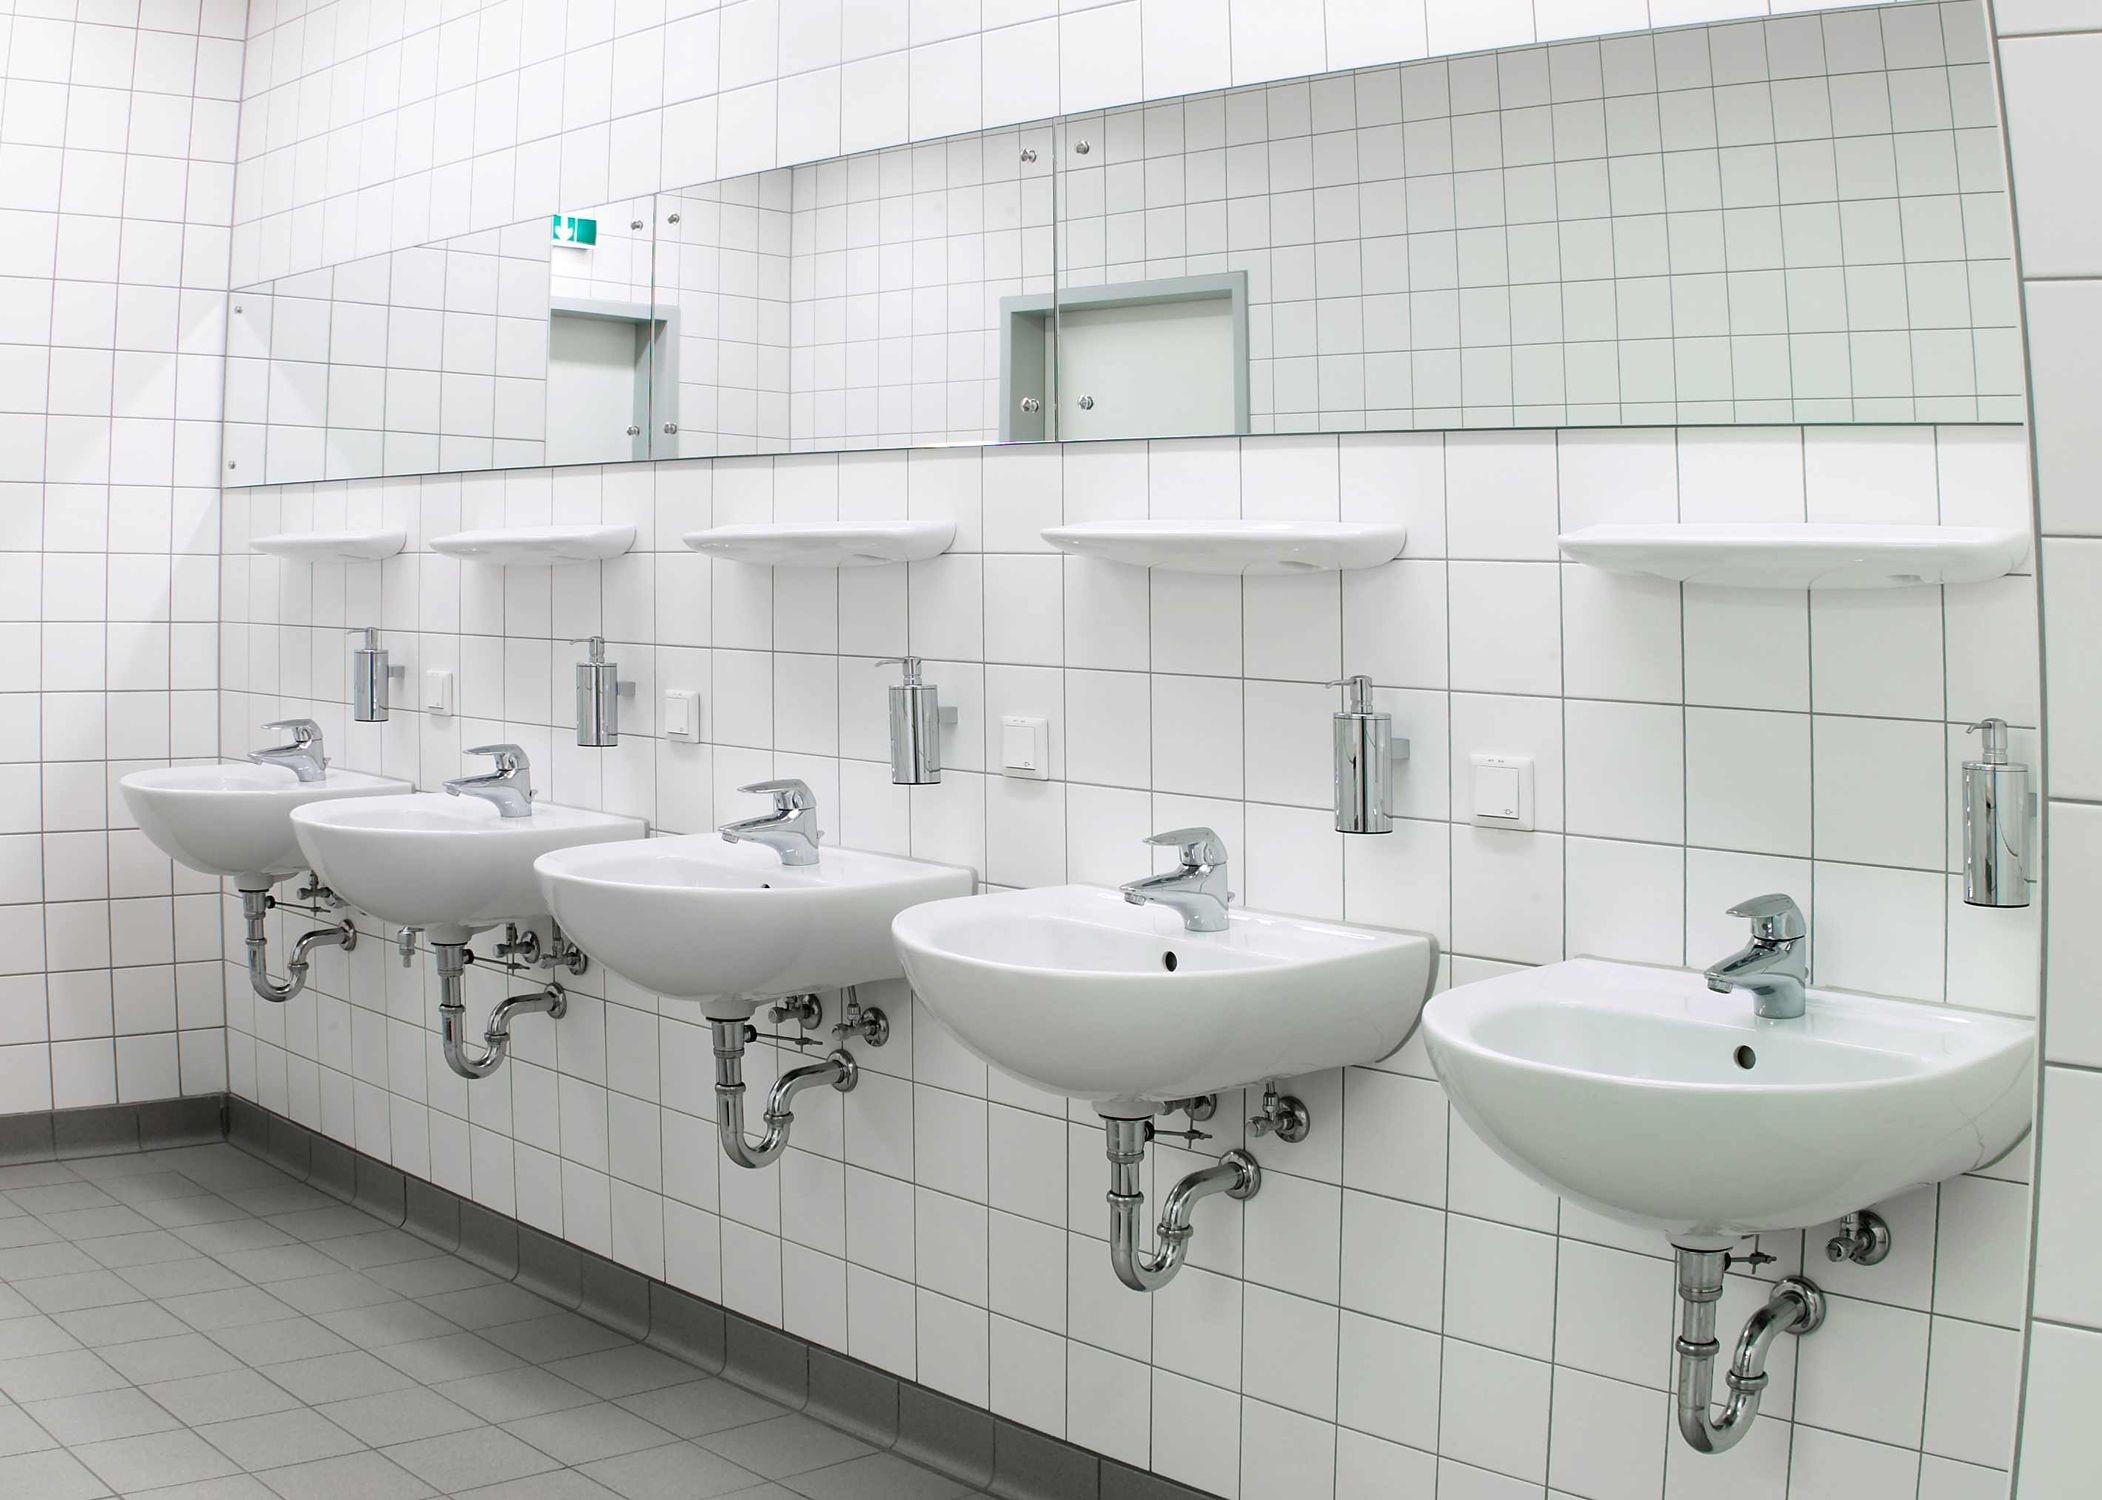 Best ideas about Commercial Bathroom Accessories
. Save or Pin Fresh Bathroom Accessories Manufacturer dkbzaWeb Now.